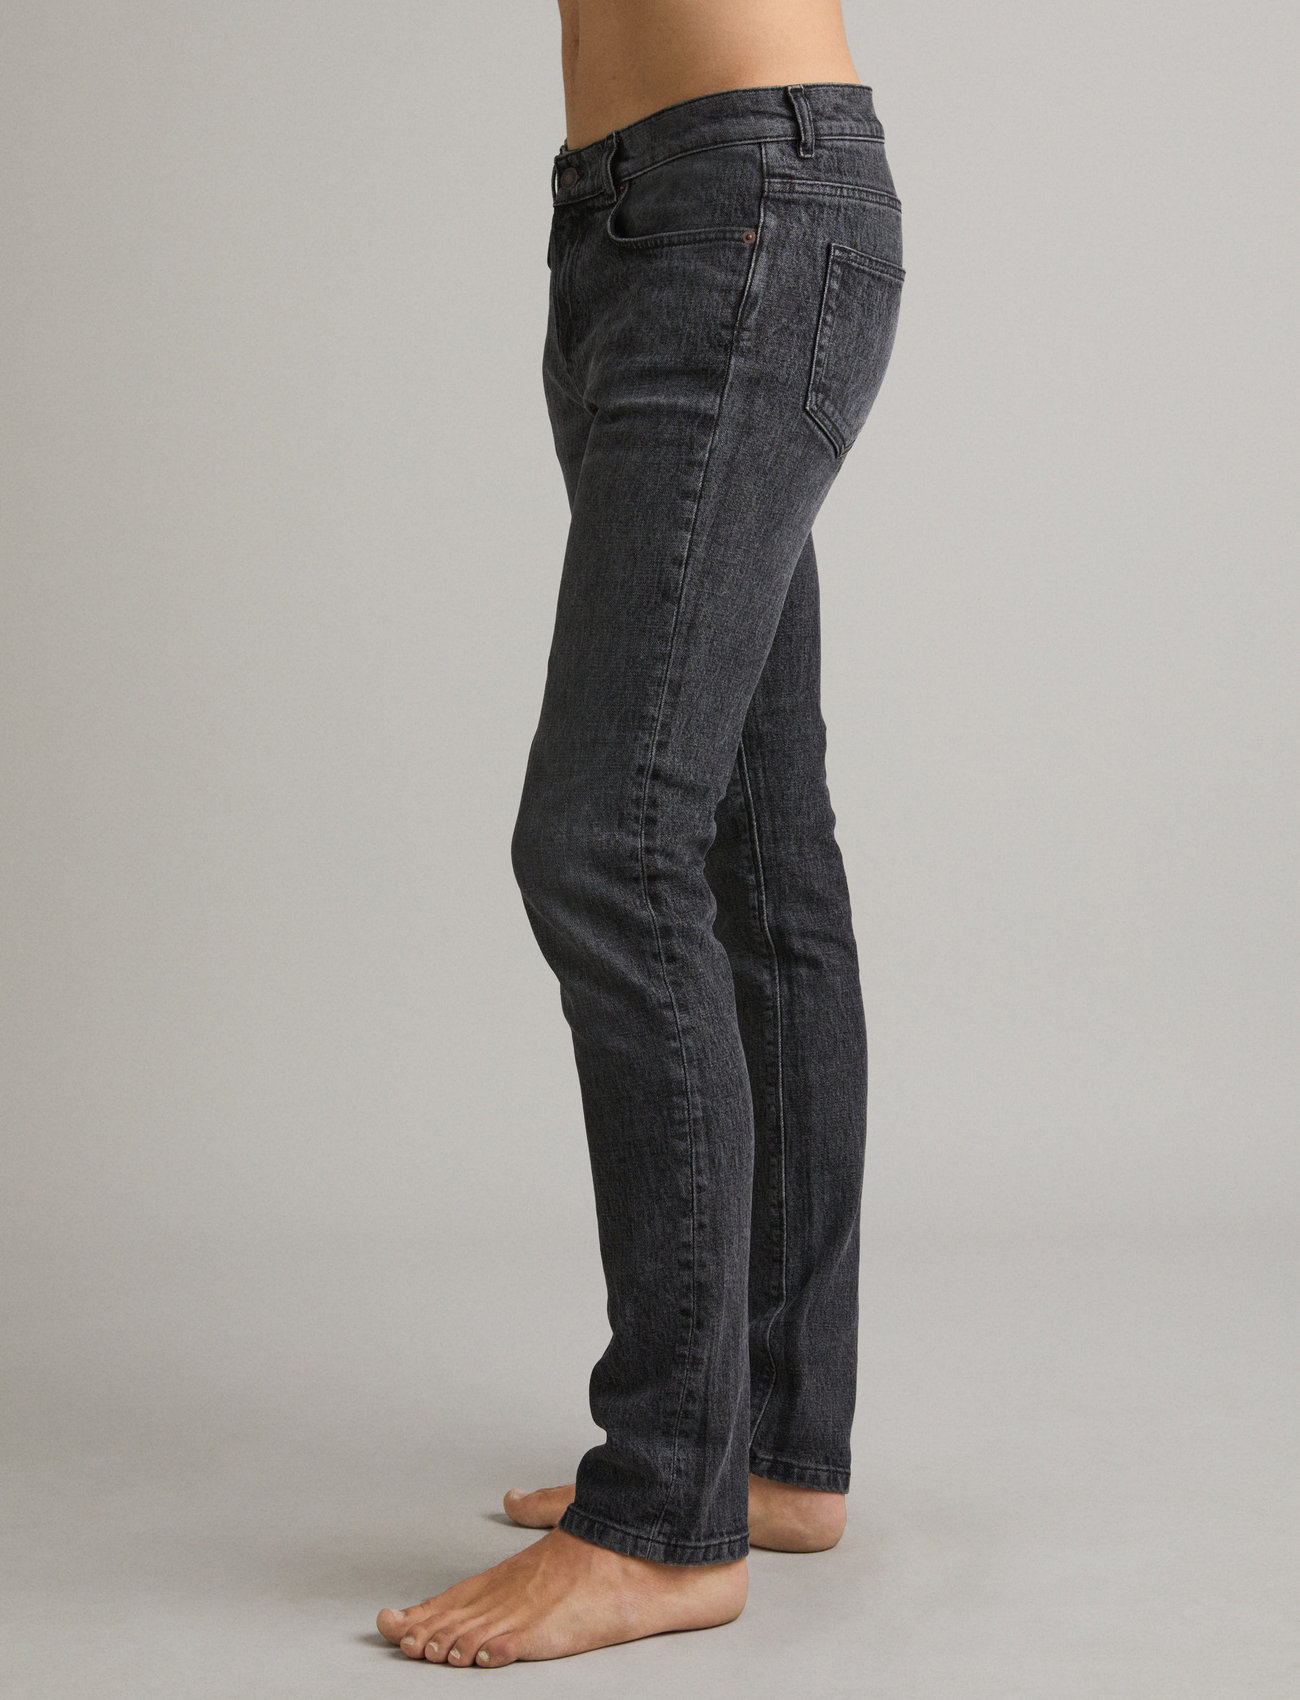 Jeanerica - SM001 Slim Jeans - chemises basiques - blackvintage82 - 3